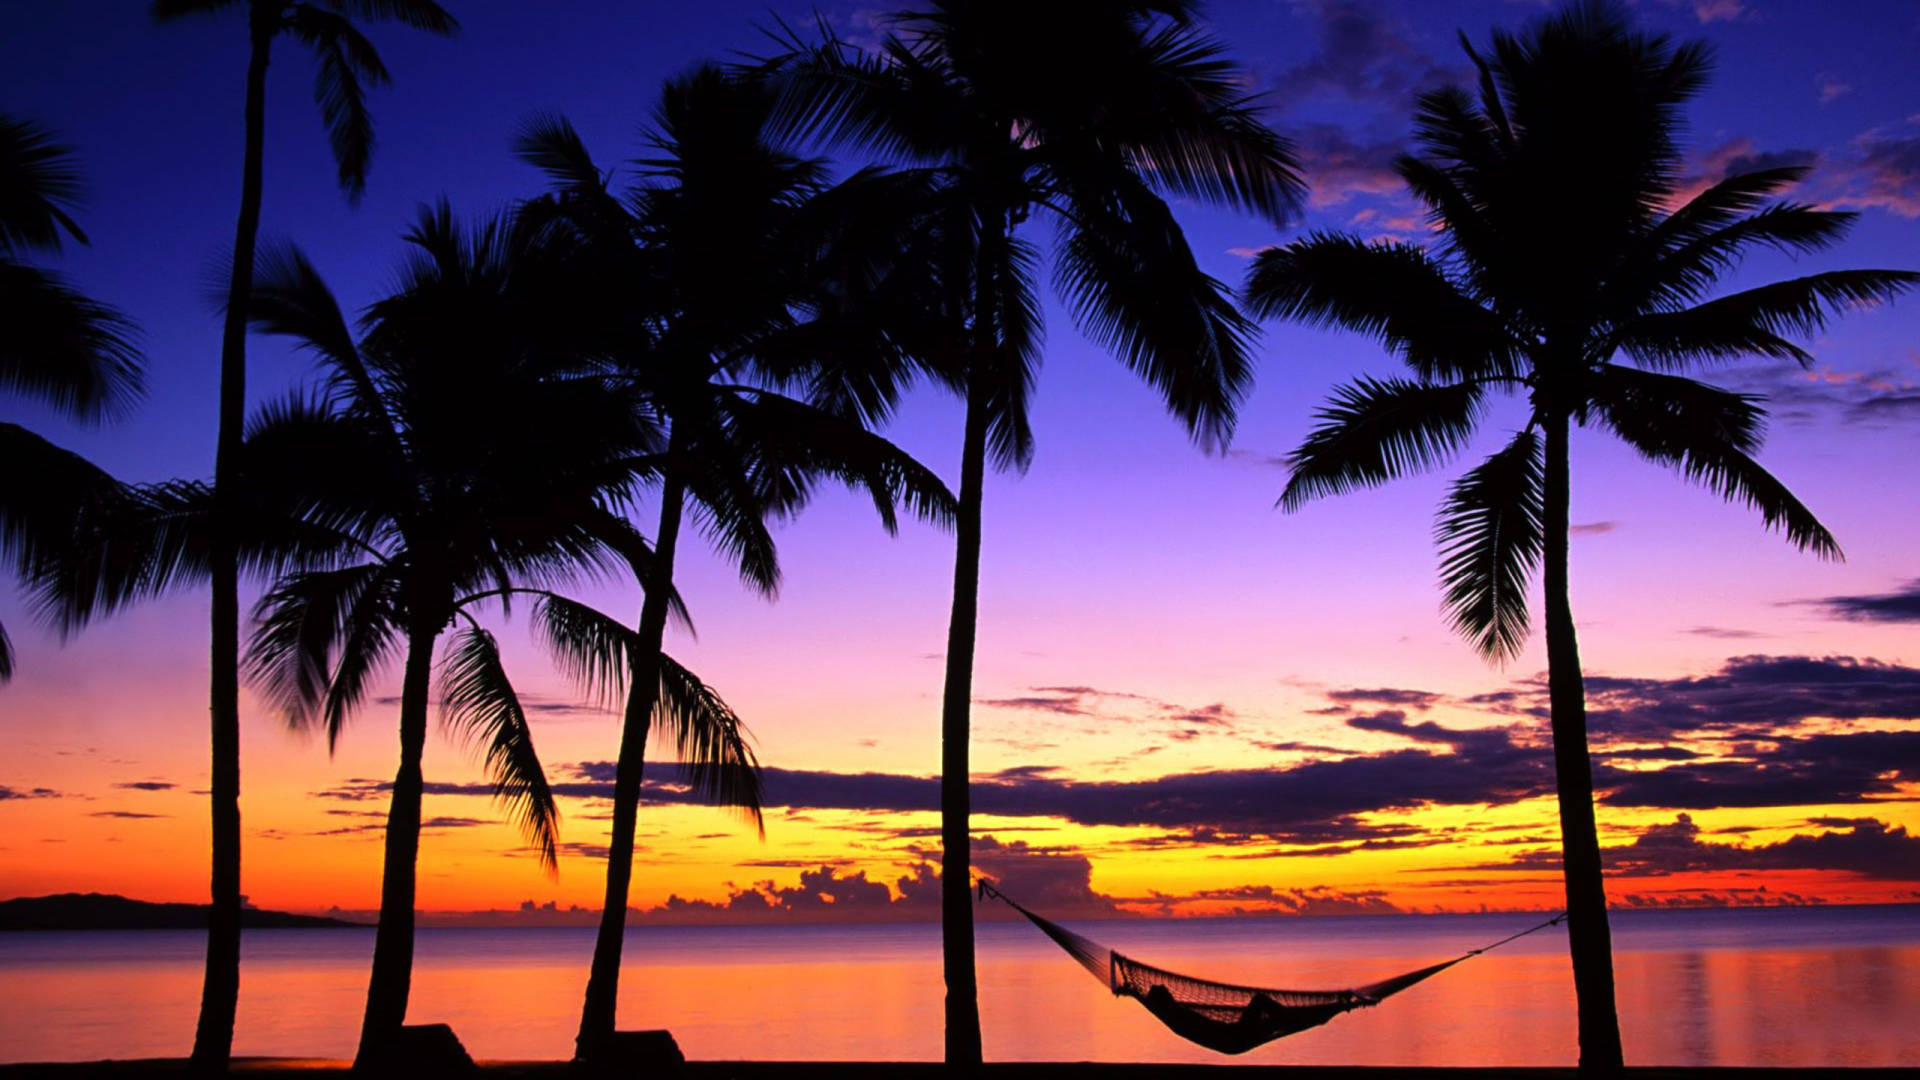 Sunset Silhouette Beach Scenes Desktop Wallpaper